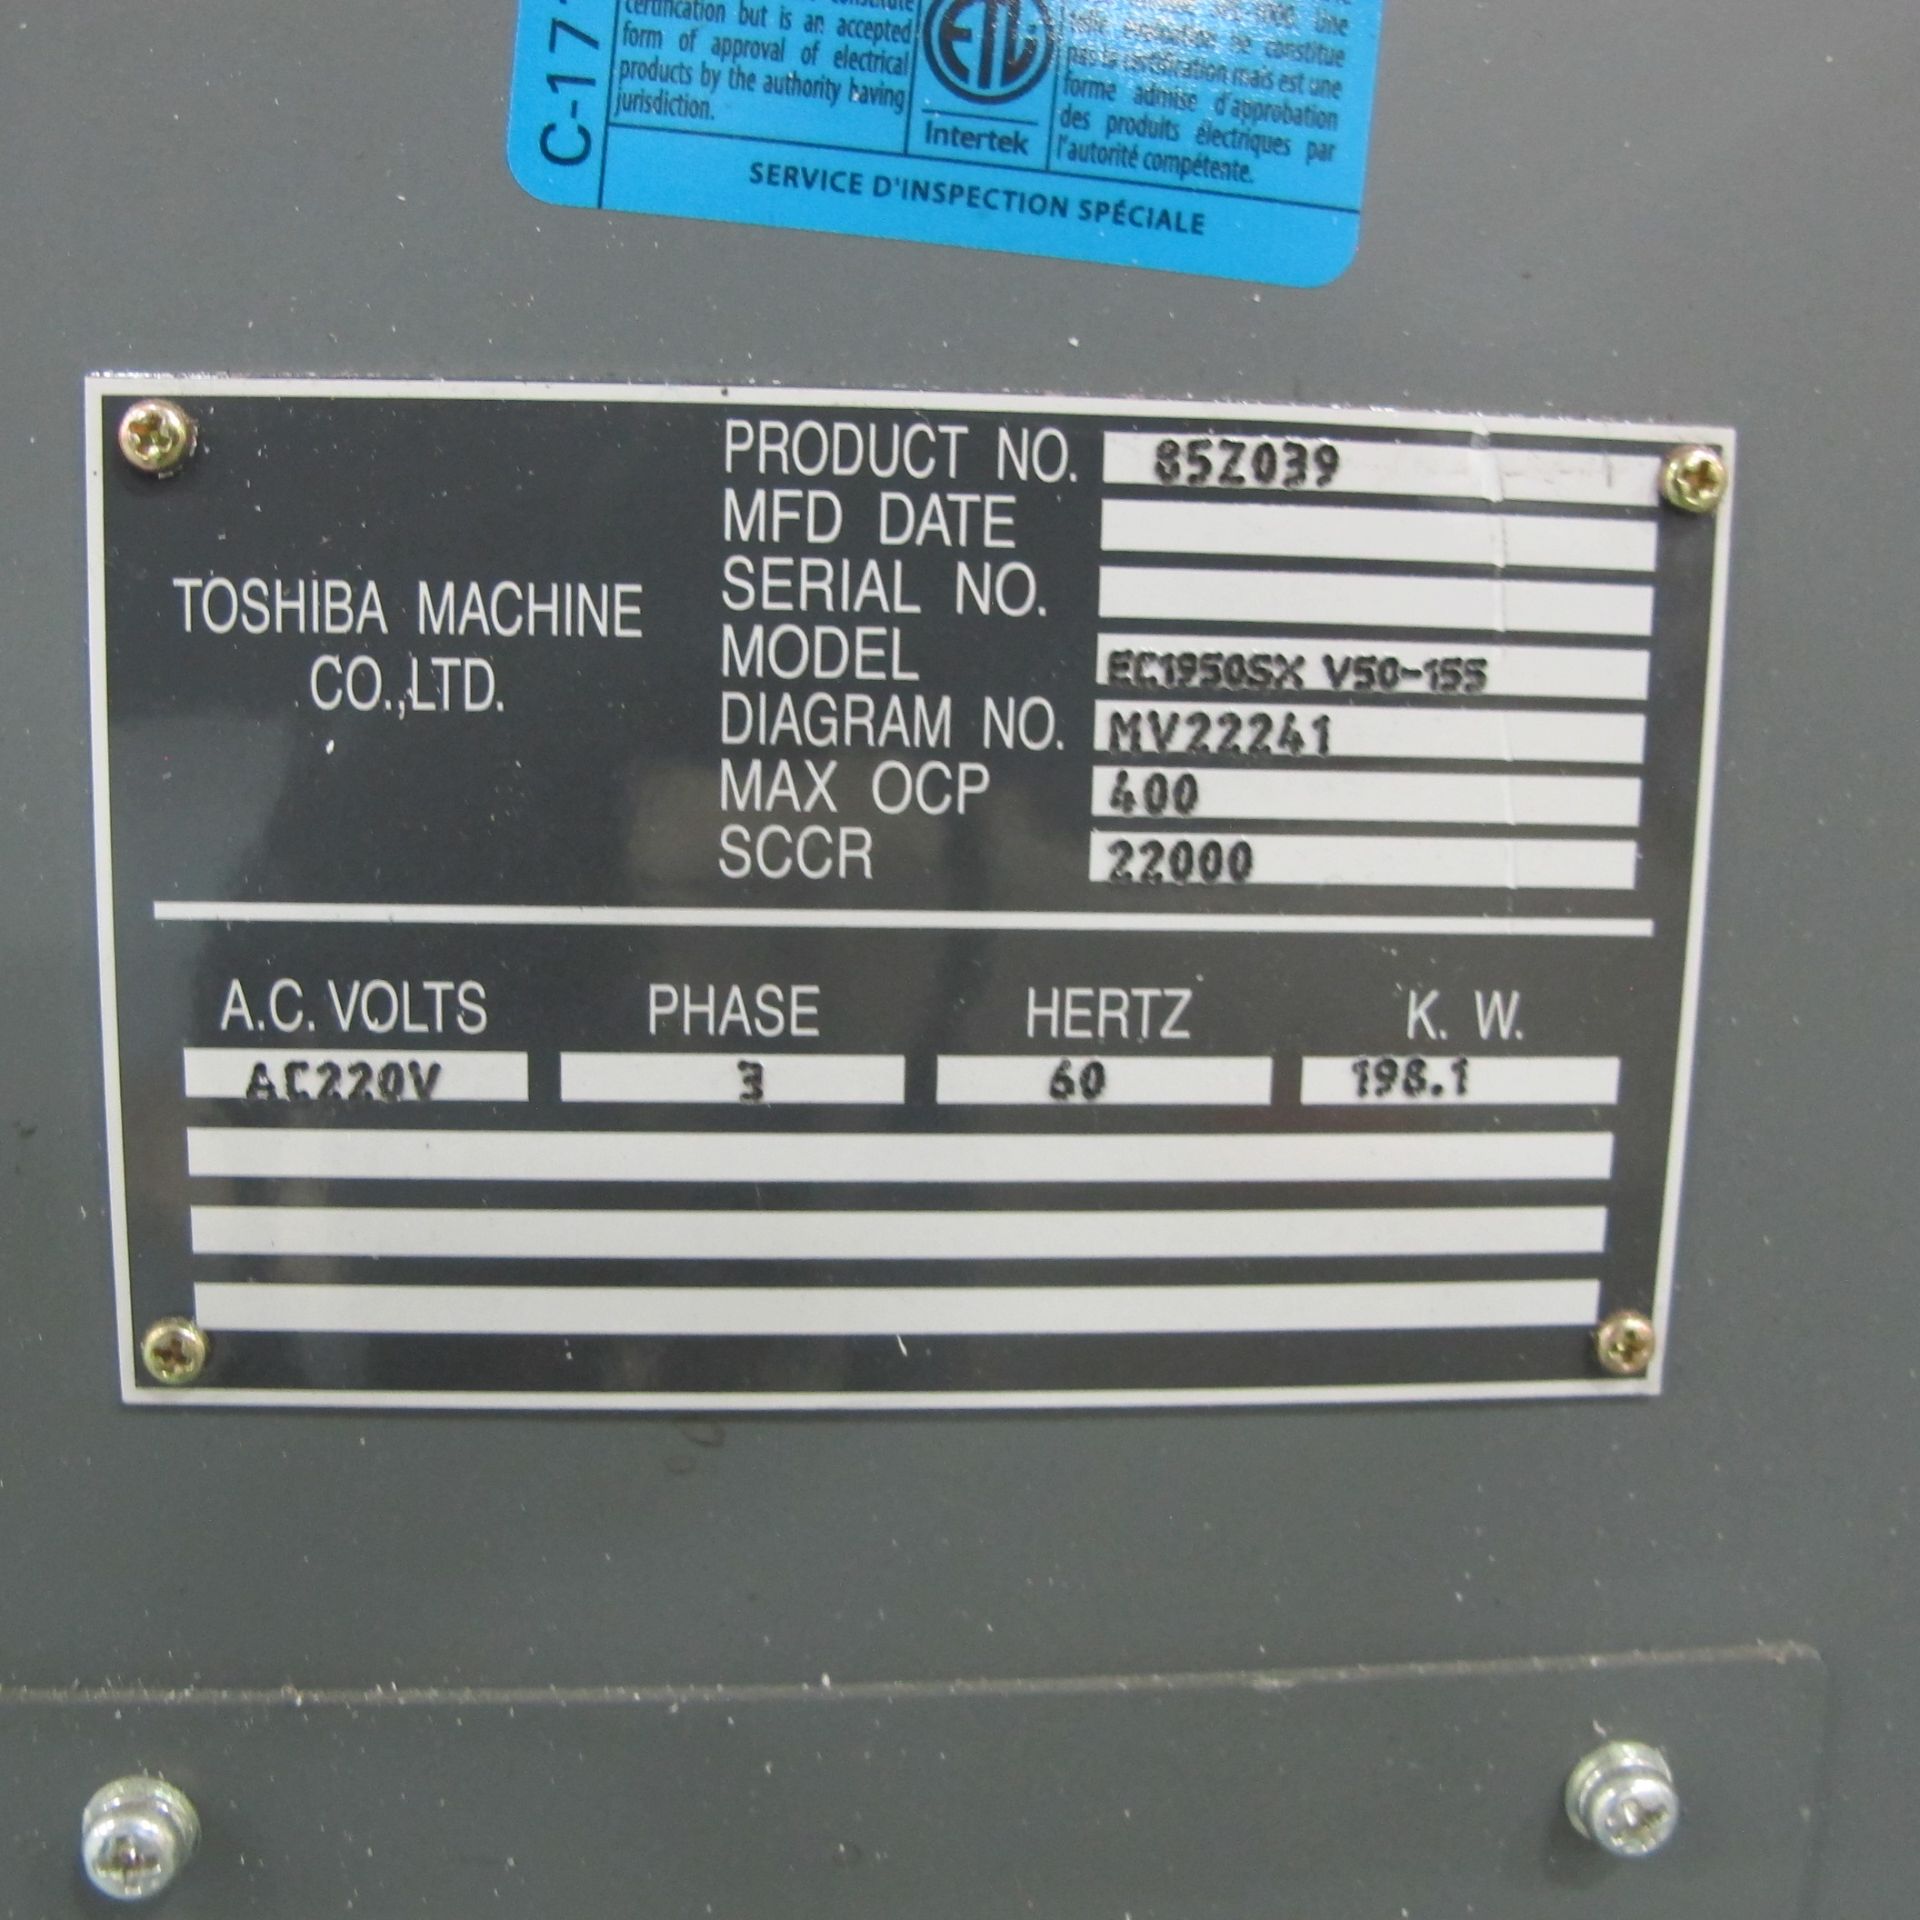 1980 TON 273 OZ TOSHIBA ALL ELECTRIC MODEL EC1950SXV50-155A HORIZONTAL INJECTION MOLDING MACHINE MFG - Image 9 of 35